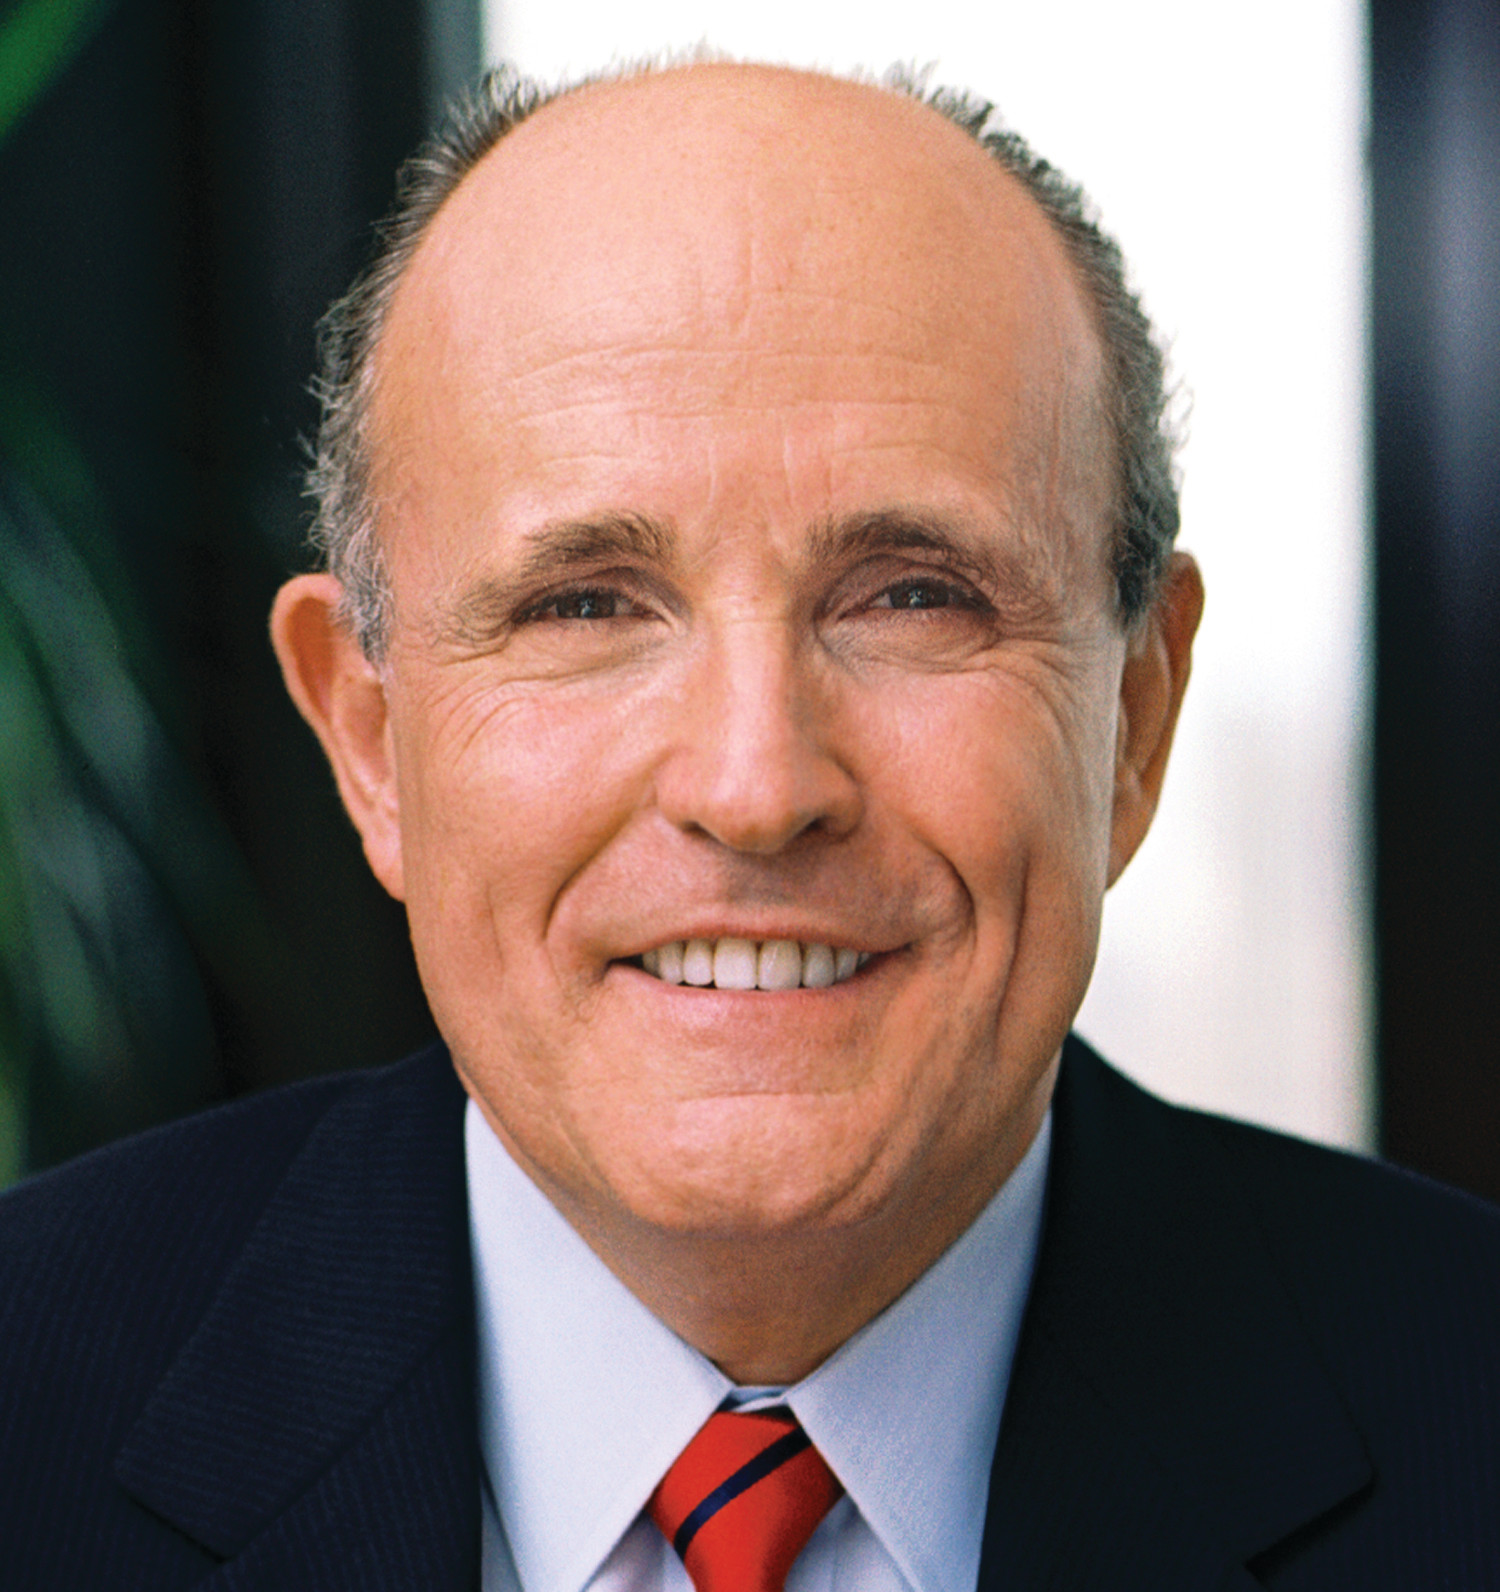 Former New York Mayor Rudy Giuliani to Keynote ADISA’s 2018 Spring Conference